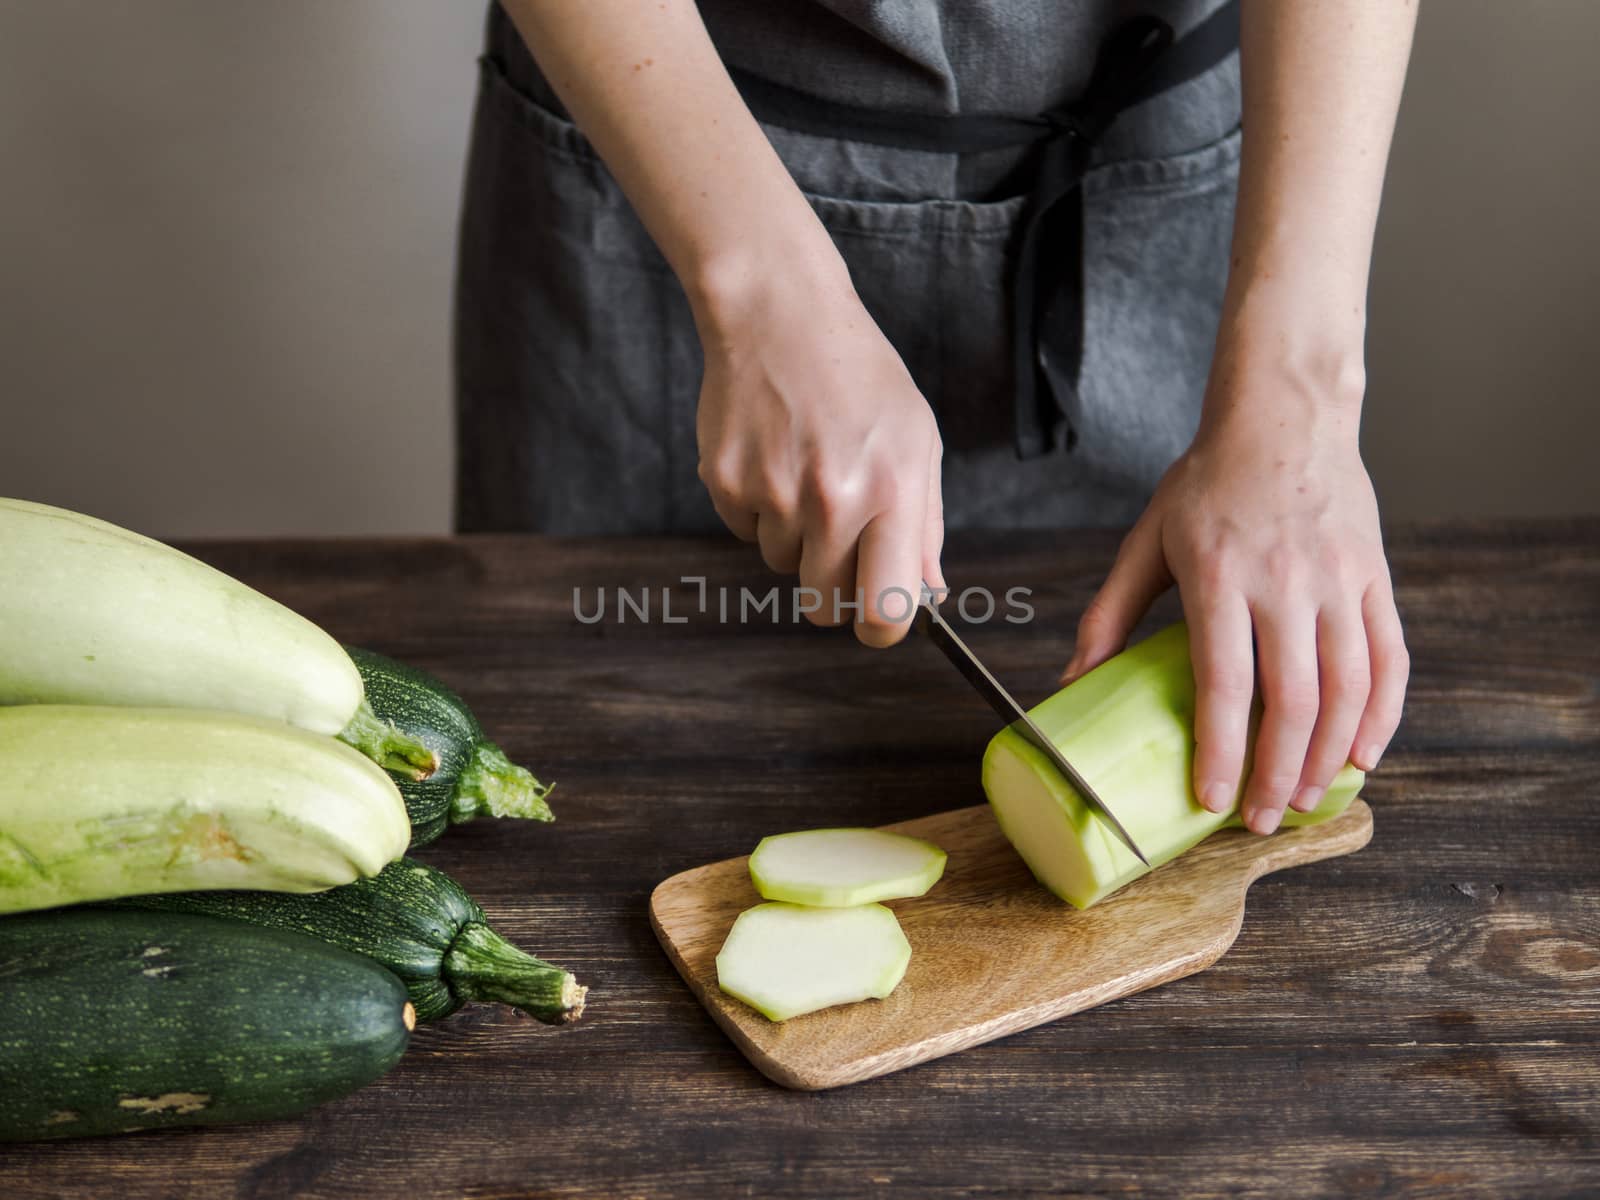 Zucchini harvest. Woman slices zucchini on wooden table. Farm organic zucchini harvesting